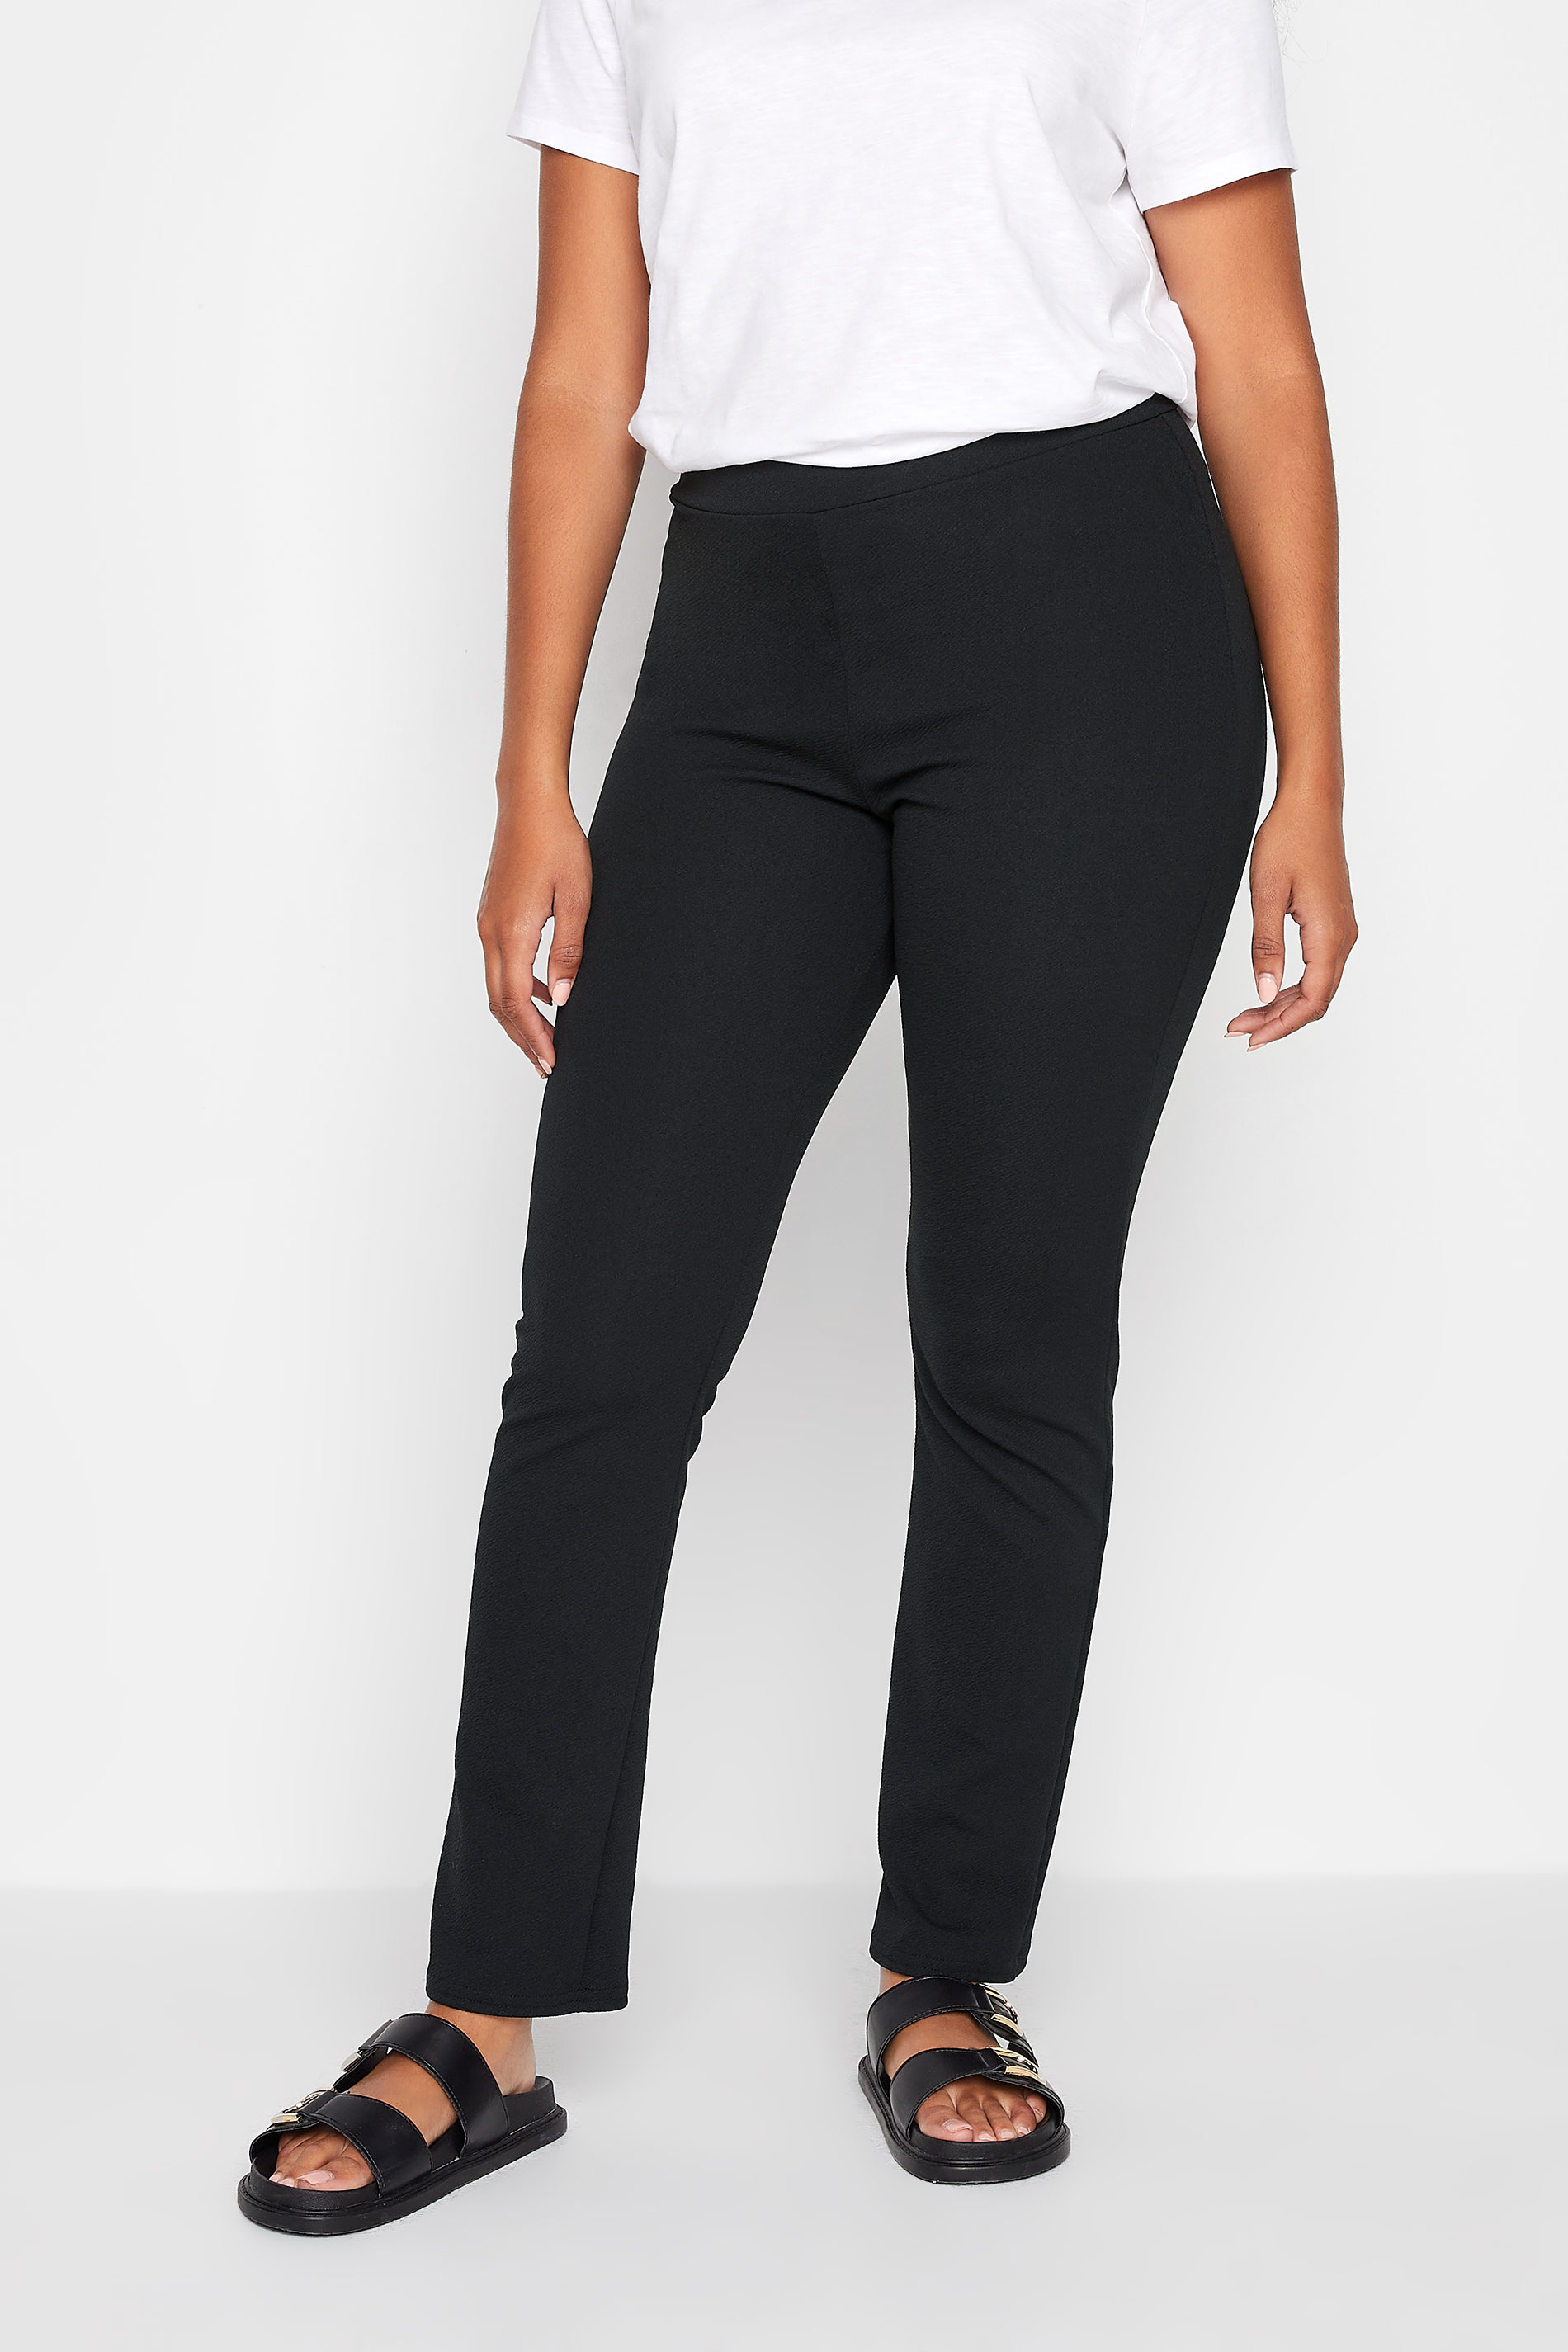 Buy Black Trousers Women Fit online | Lazada.com.ph-saigonsouth.com.vn